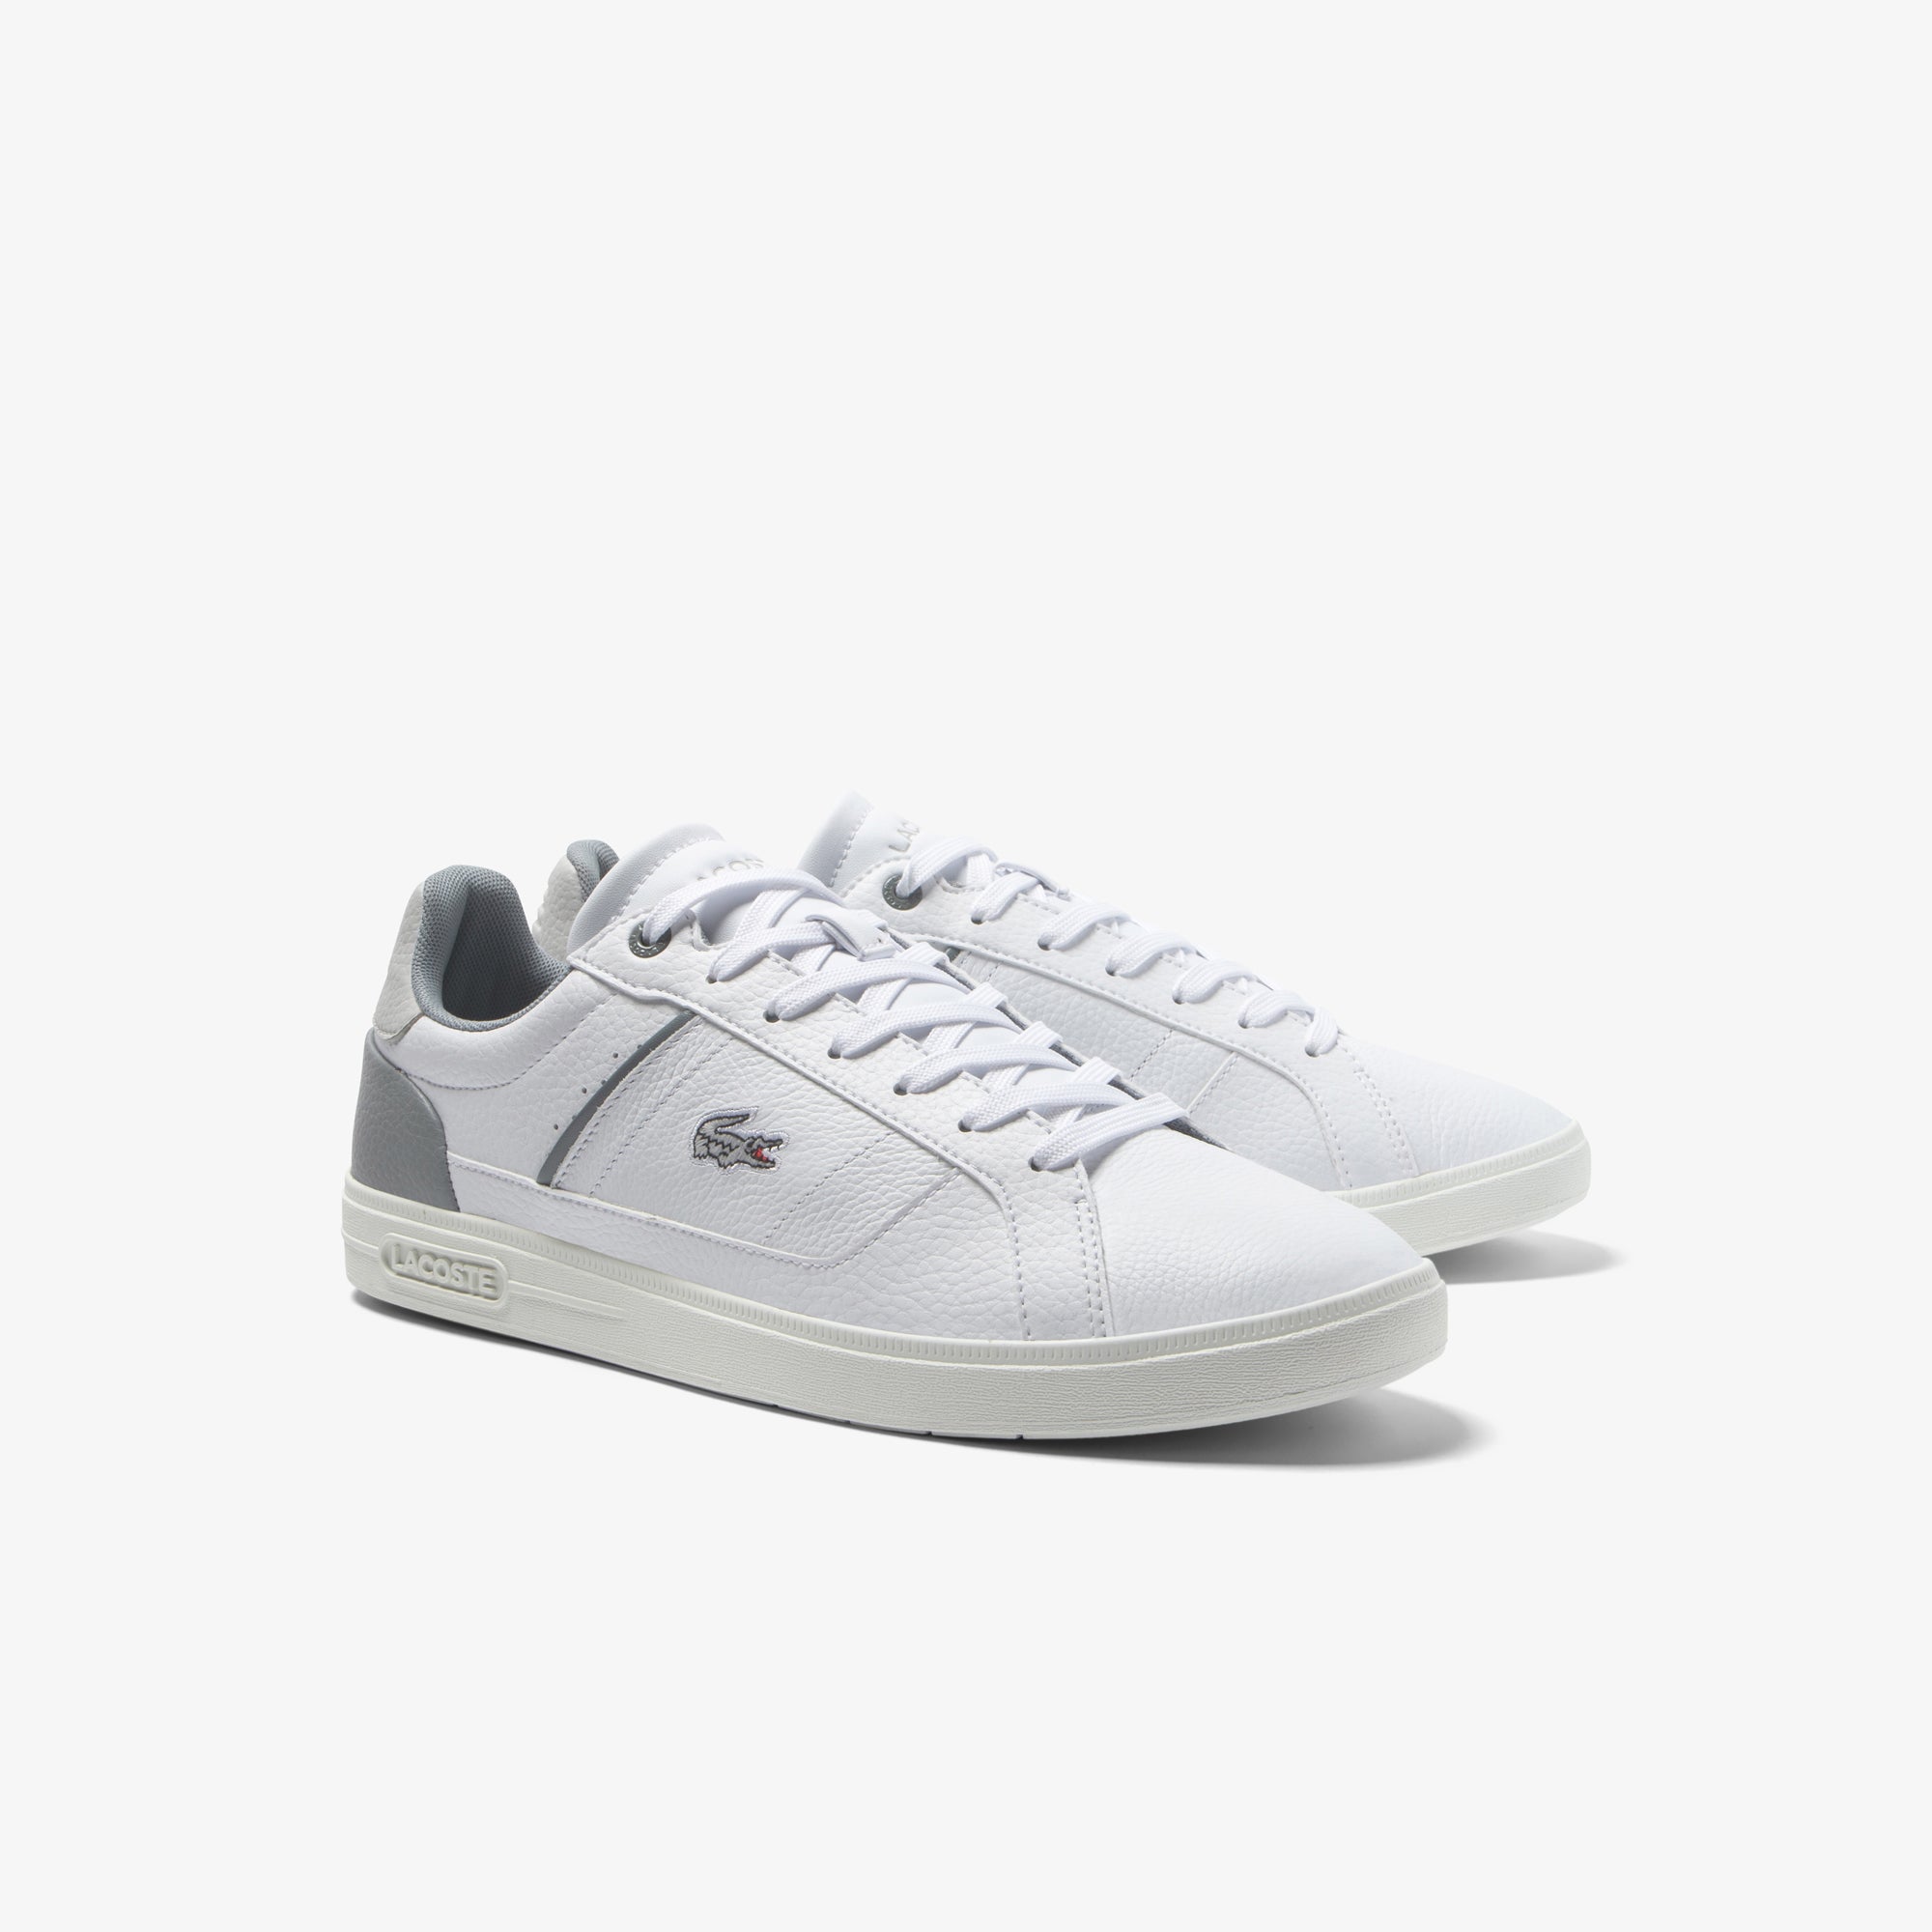 Lacoste - Europa Pro 123 2 SMA Sneaker - White/Grey